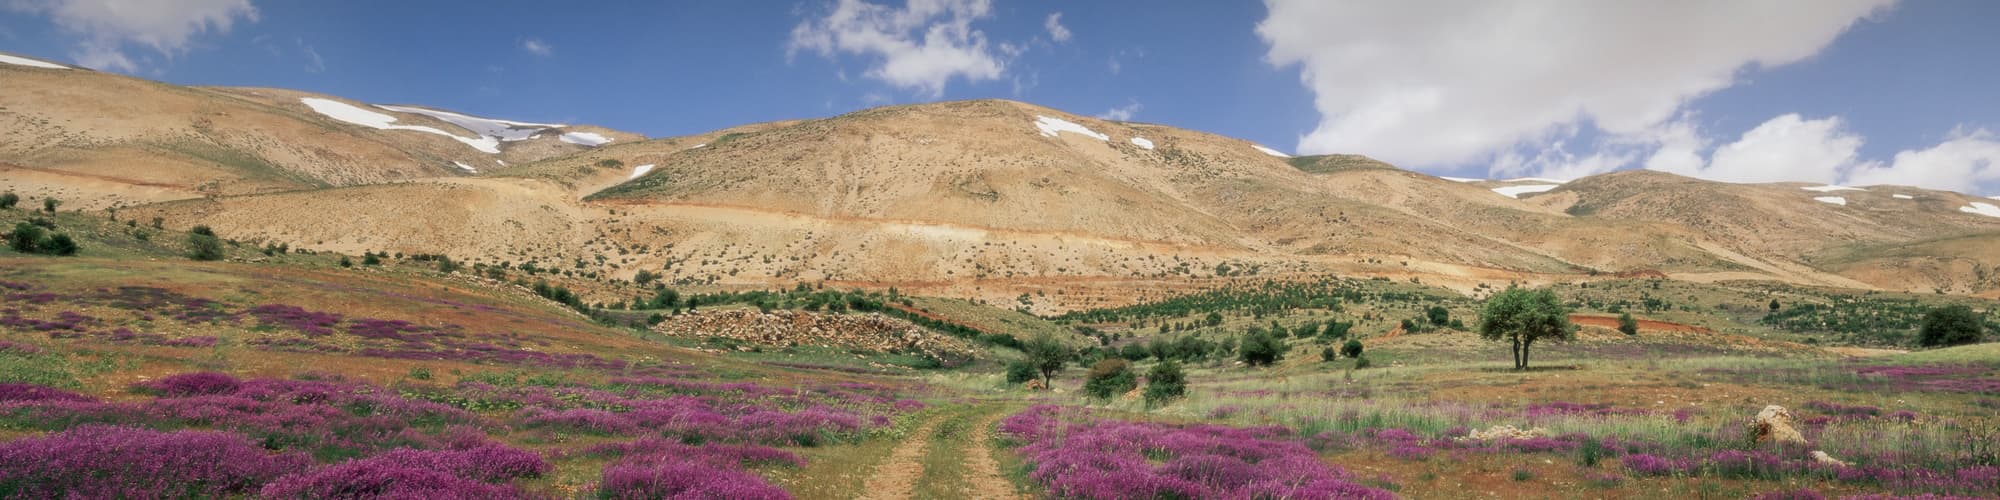 Trek Liban © Daniel Thierry/Photononstop